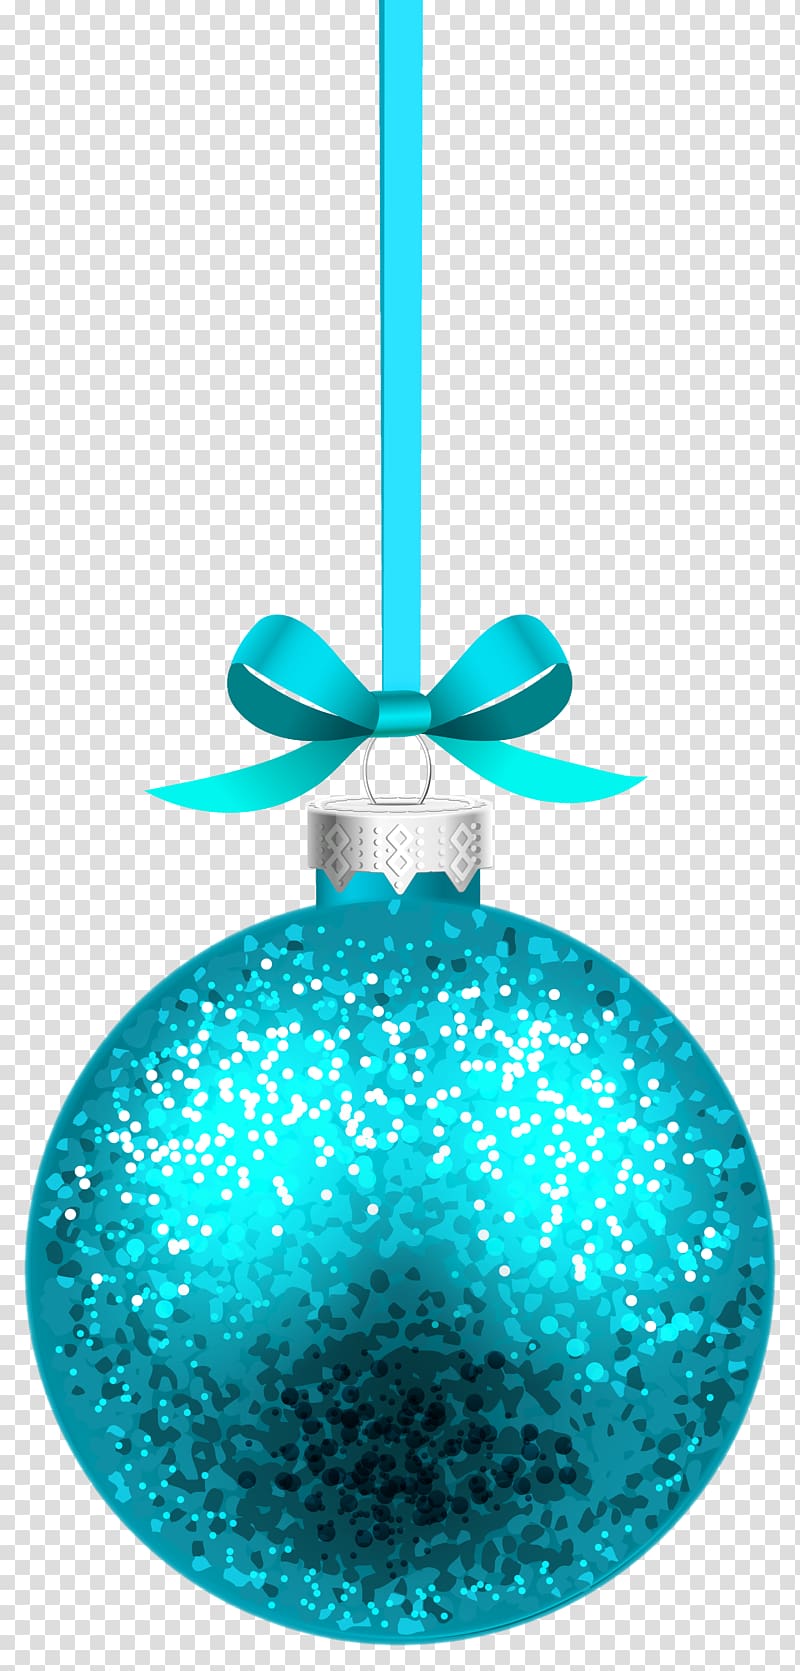 Christmas ornament Christmas decoration Christmas tree , festive ornaments transparent background PNG clipart